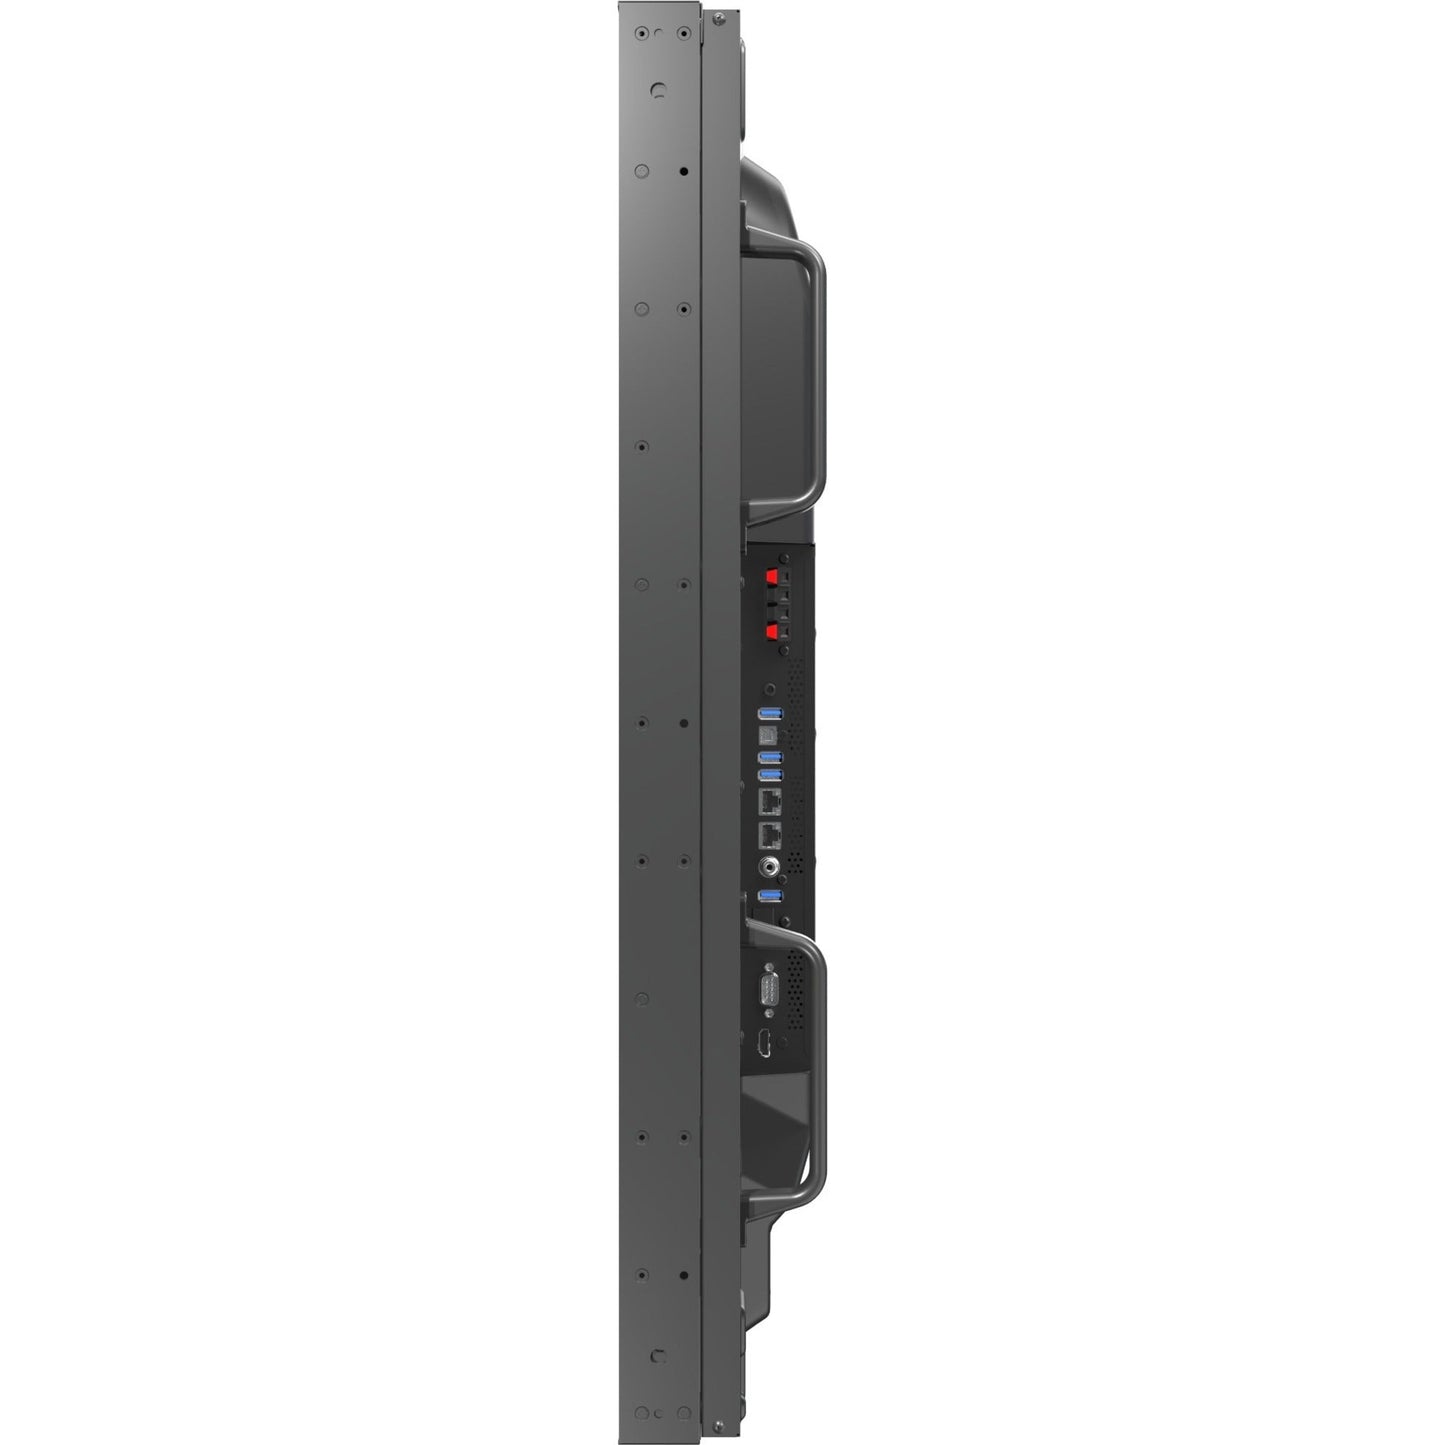 NEC Display 55" Ultra-Narrow Bezel Professional-Grade Display